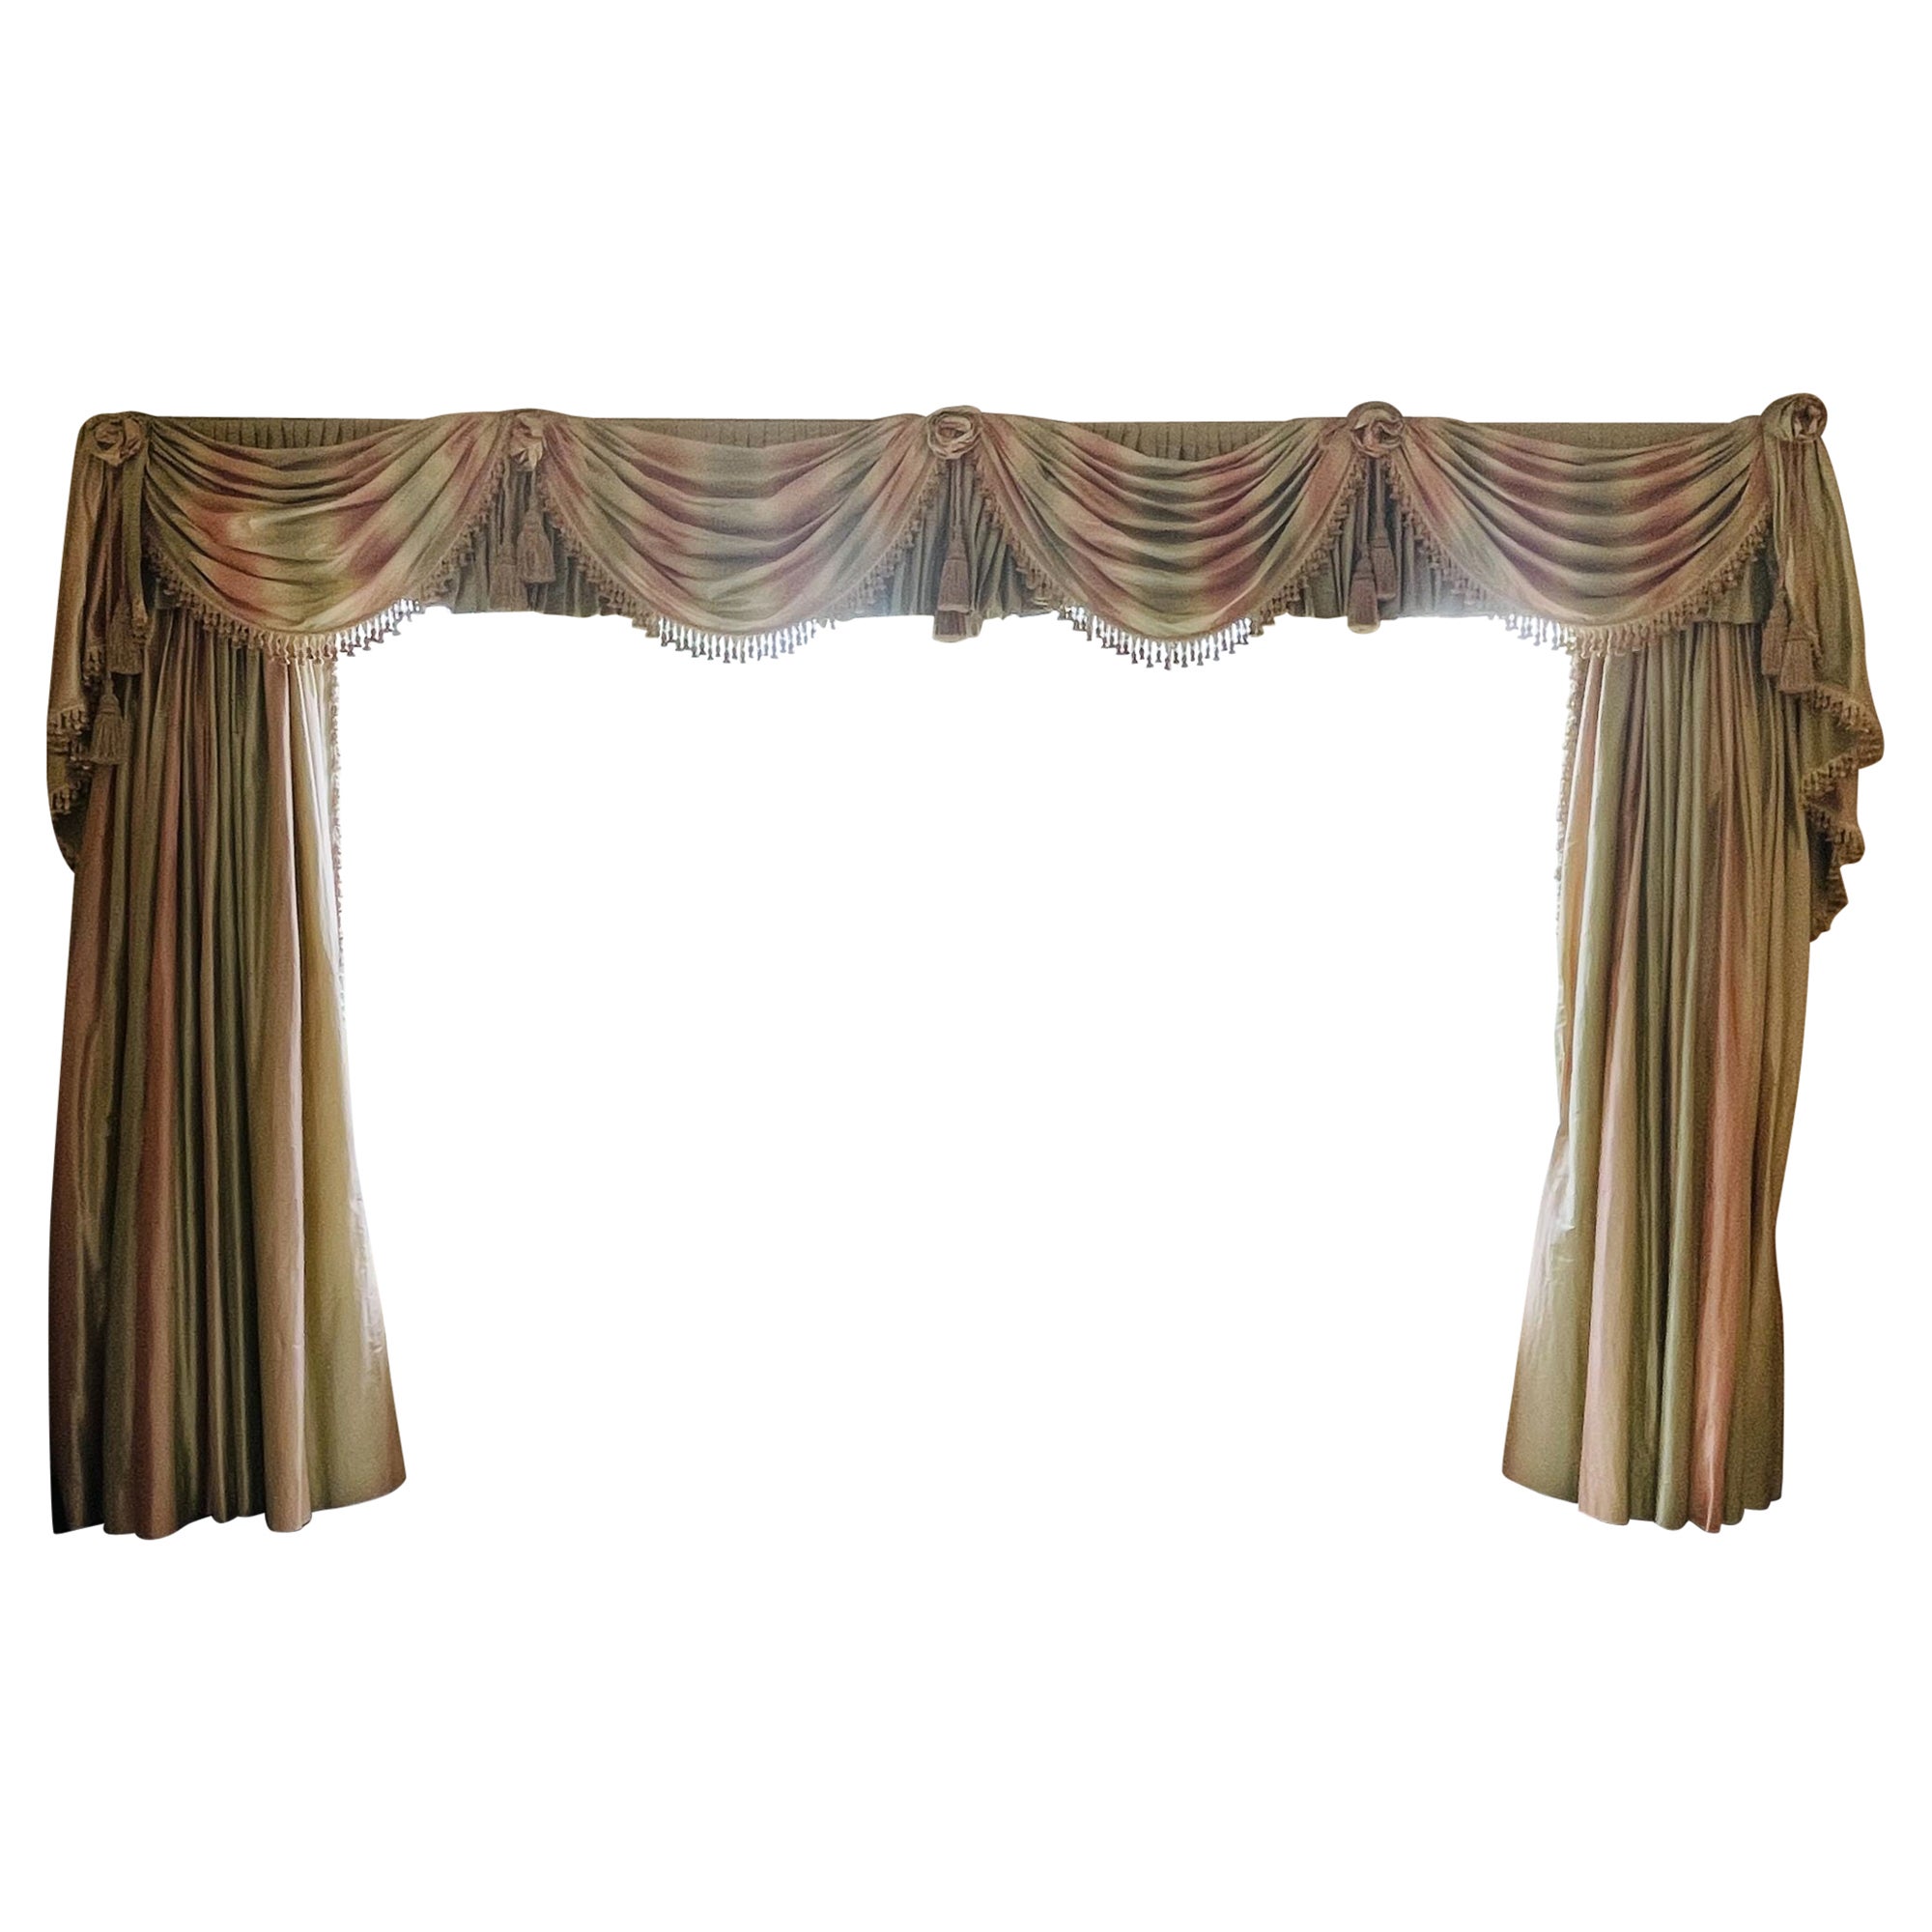 Scalamandre Window Treatments, Curtains, Drapery Rainbow Stripe, Fringed, Lined